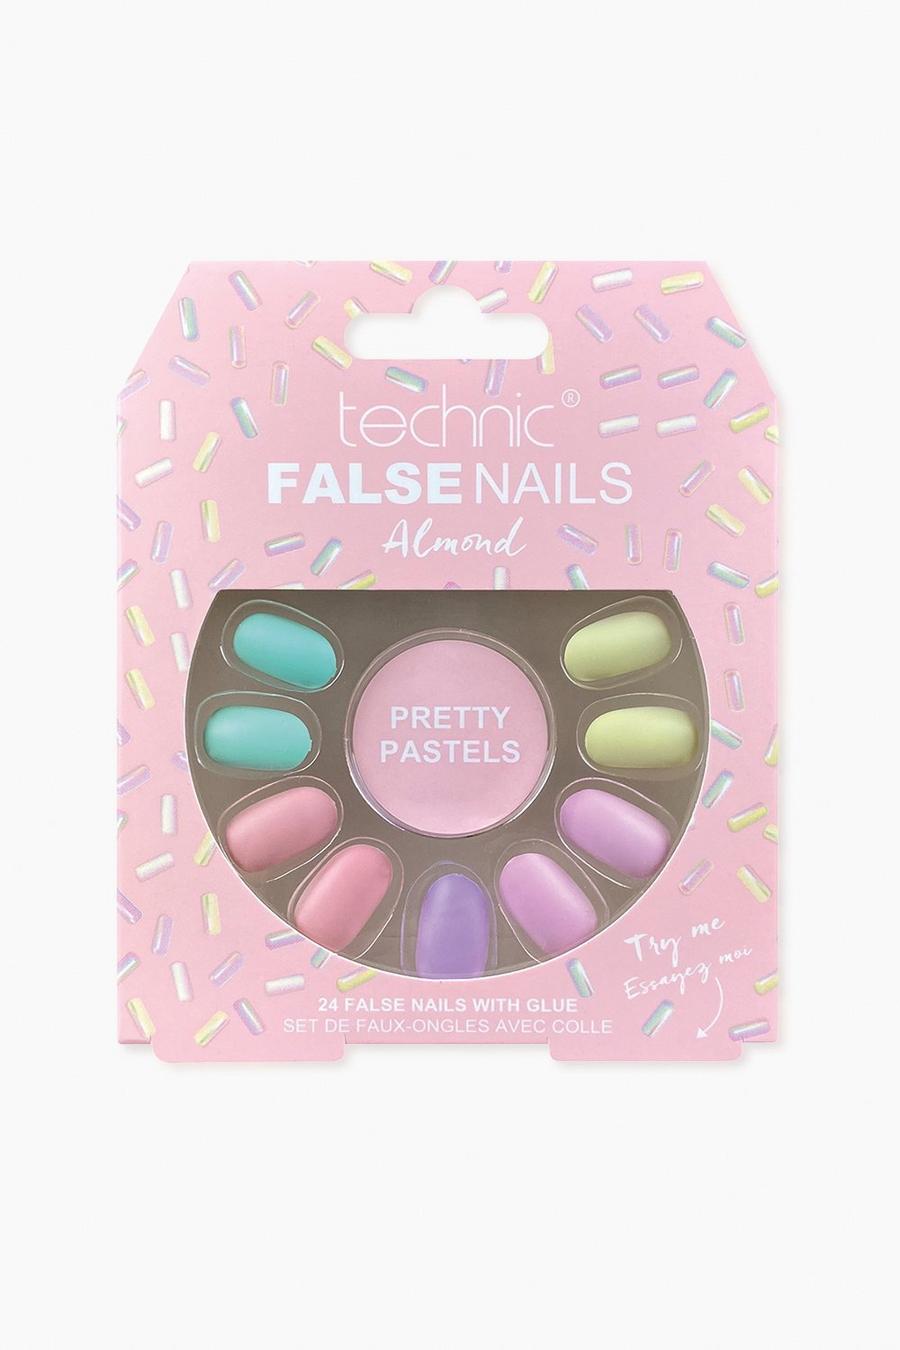 Multi Technic False Nails - Almond, Pretty Pastels image number 1